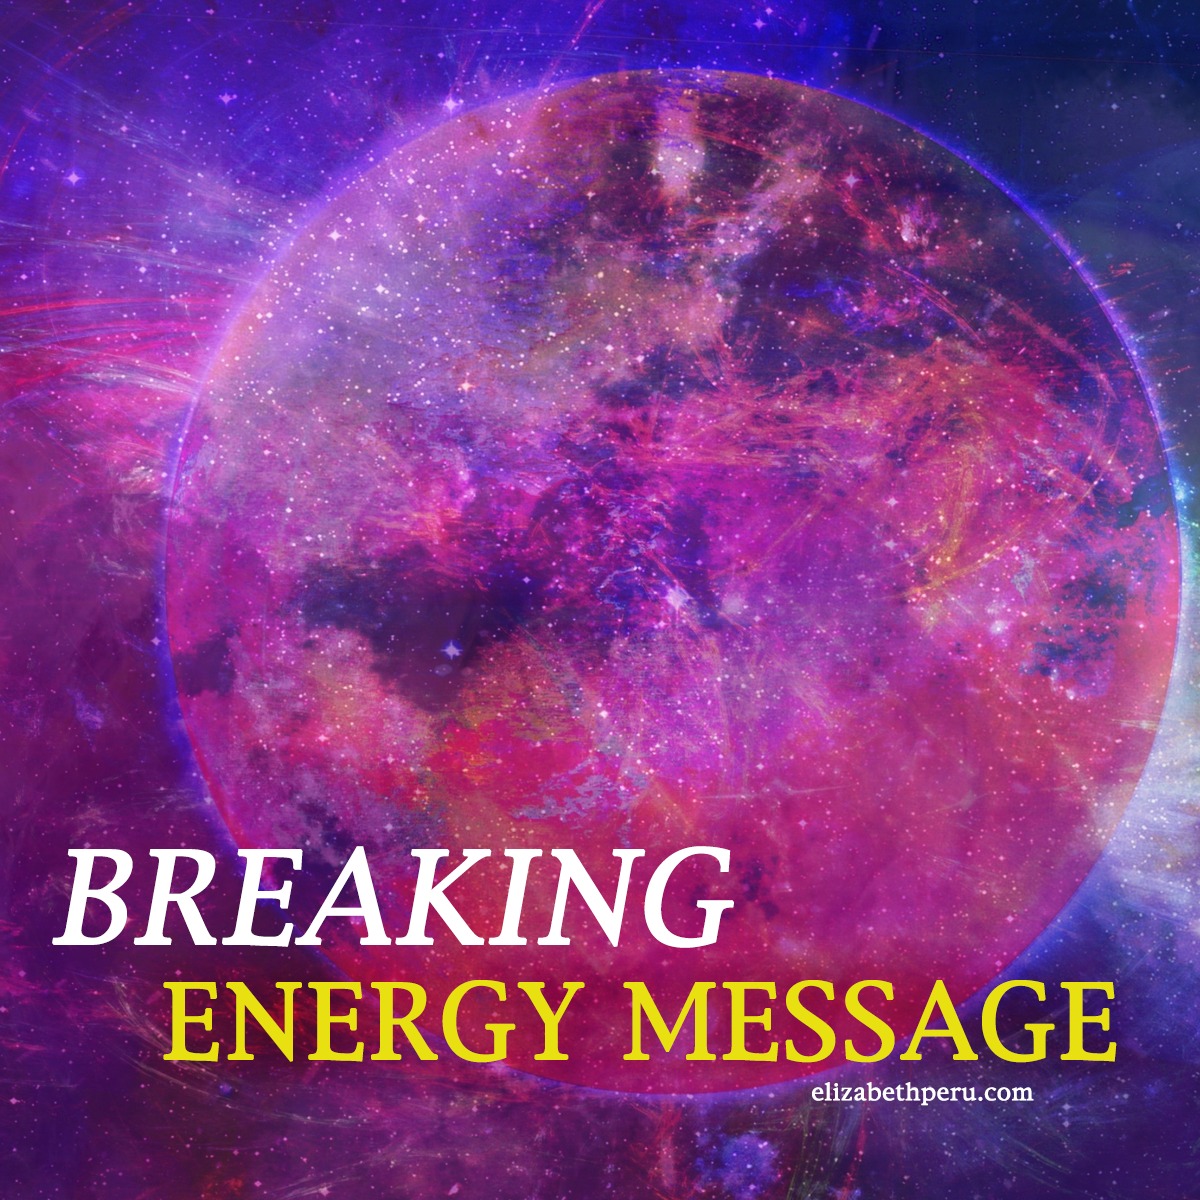 BREAKING ENERGY MESSAGE